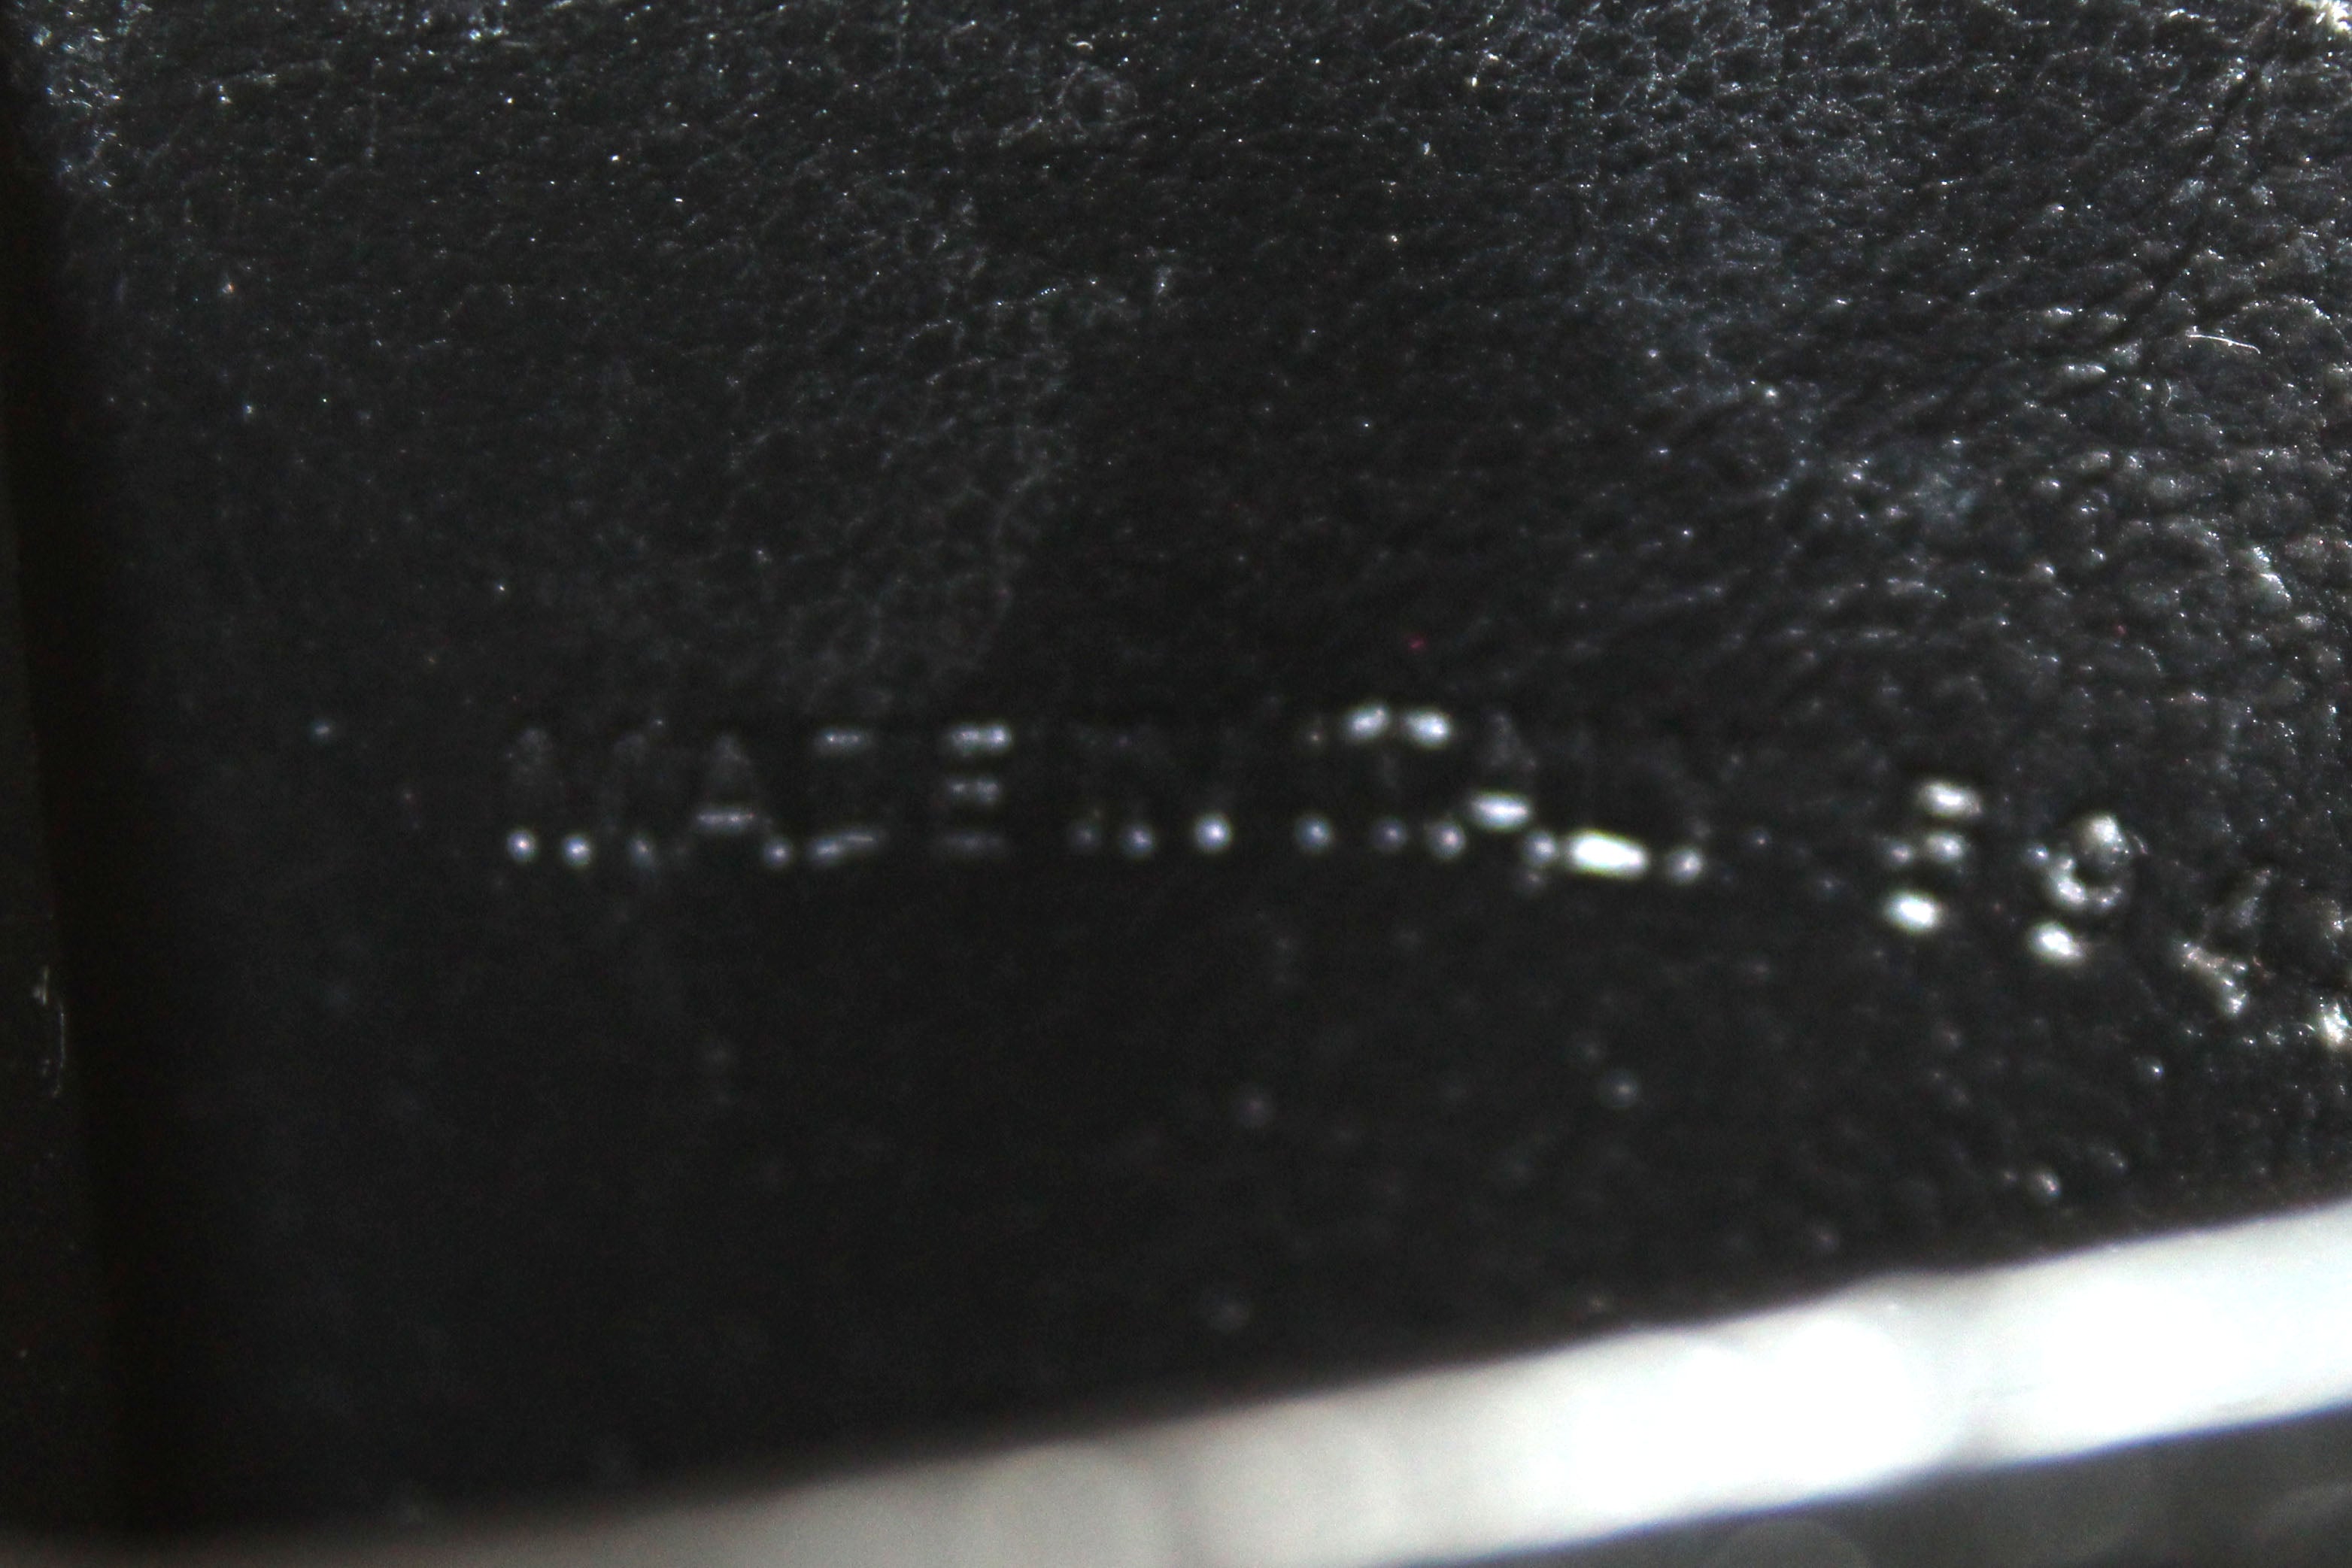 NEW Authentic Balenciaga Black Small Grain Calfskin Leather Cash Card Holder